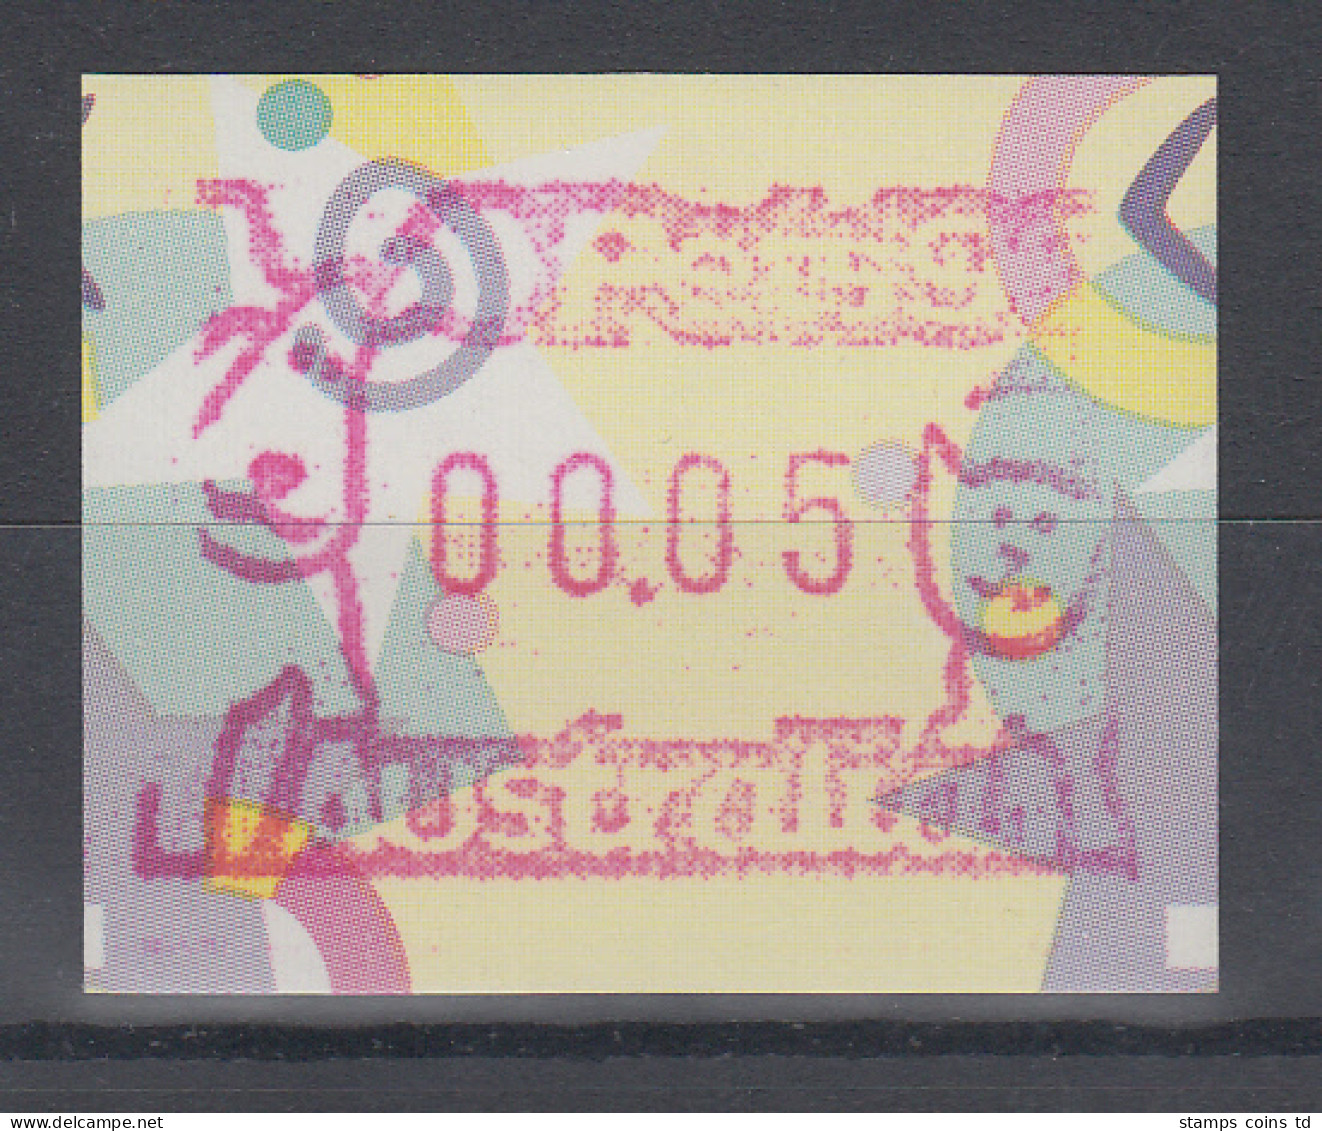 Australien Frama-ATM "Festive Frama"  Sonderausgabe Pets 96  ** - Vignette [ATM]